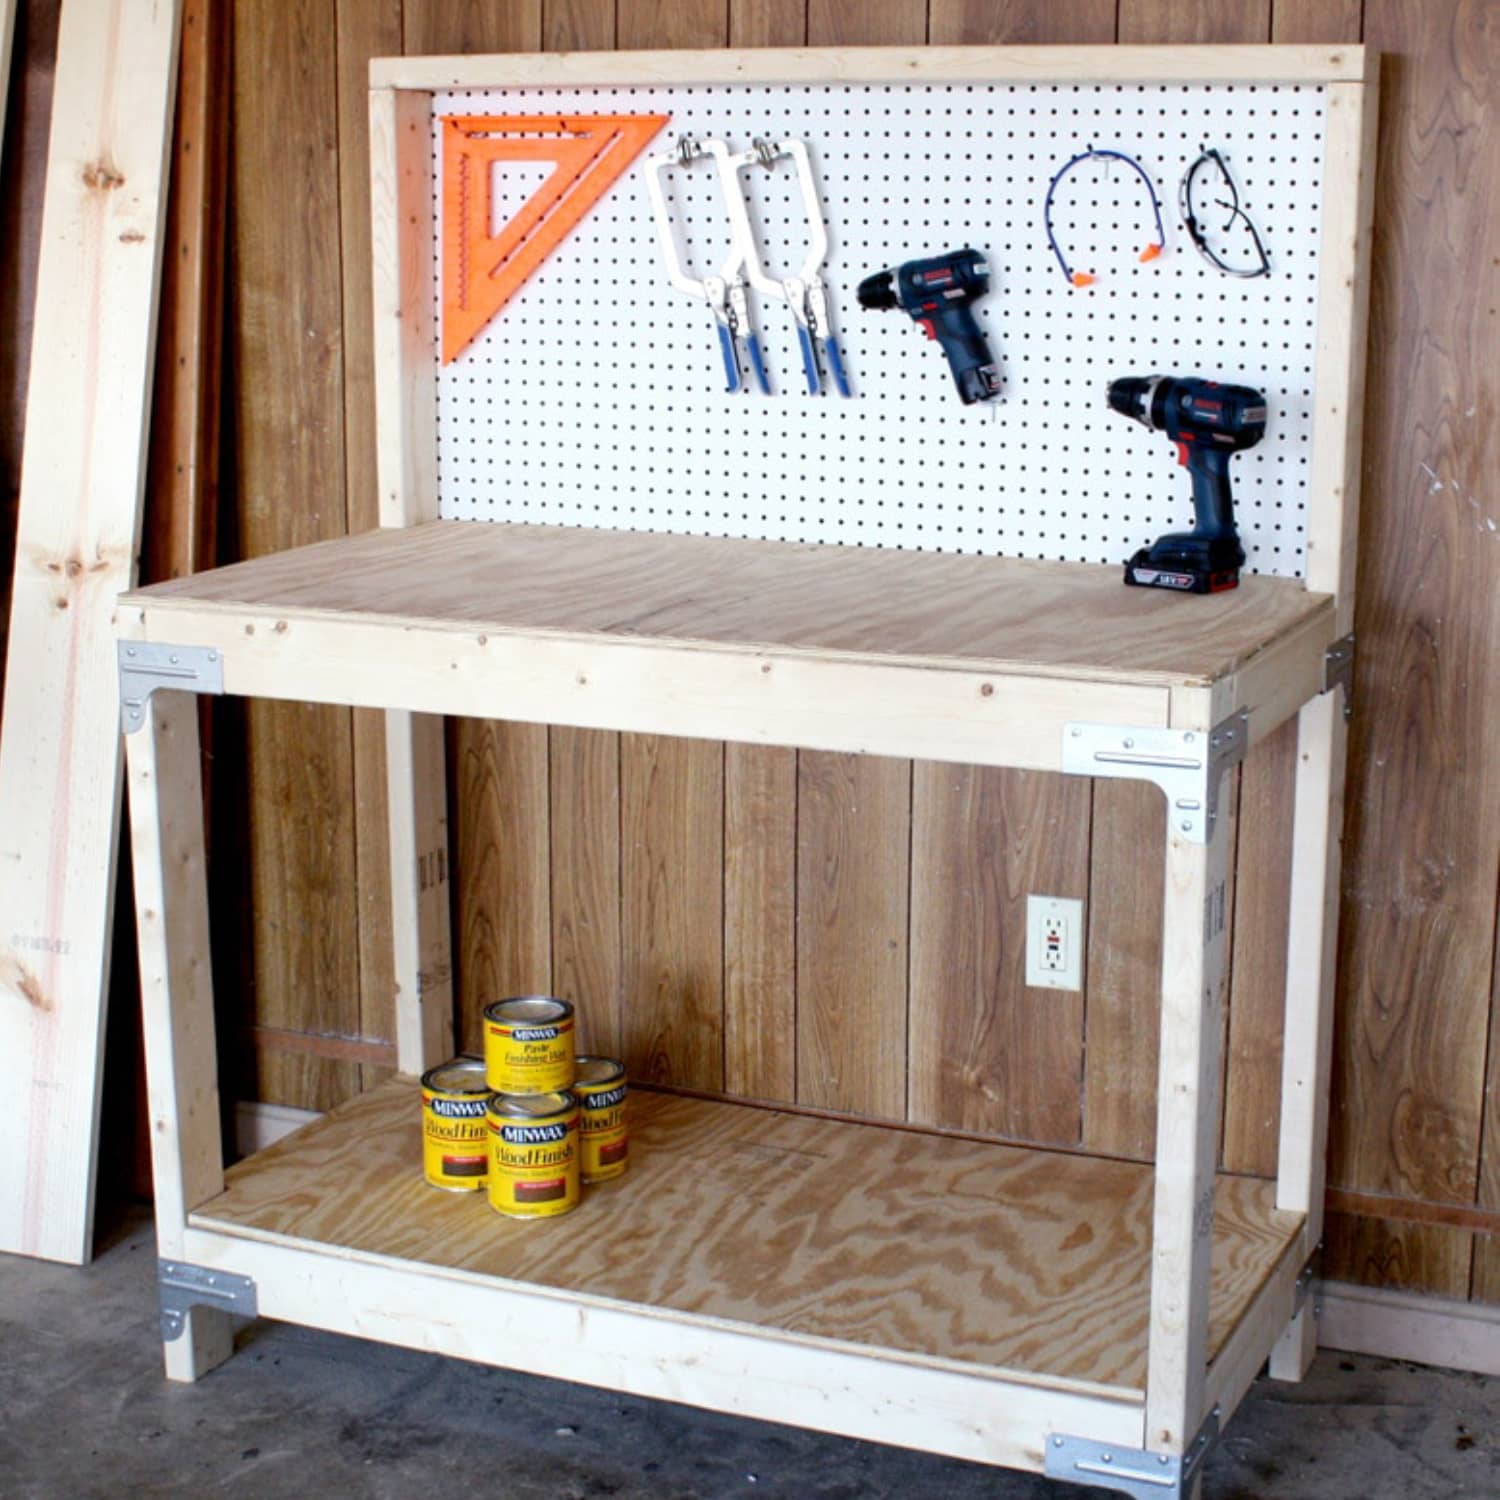 Organize your tools on an enhanced pallet shelf